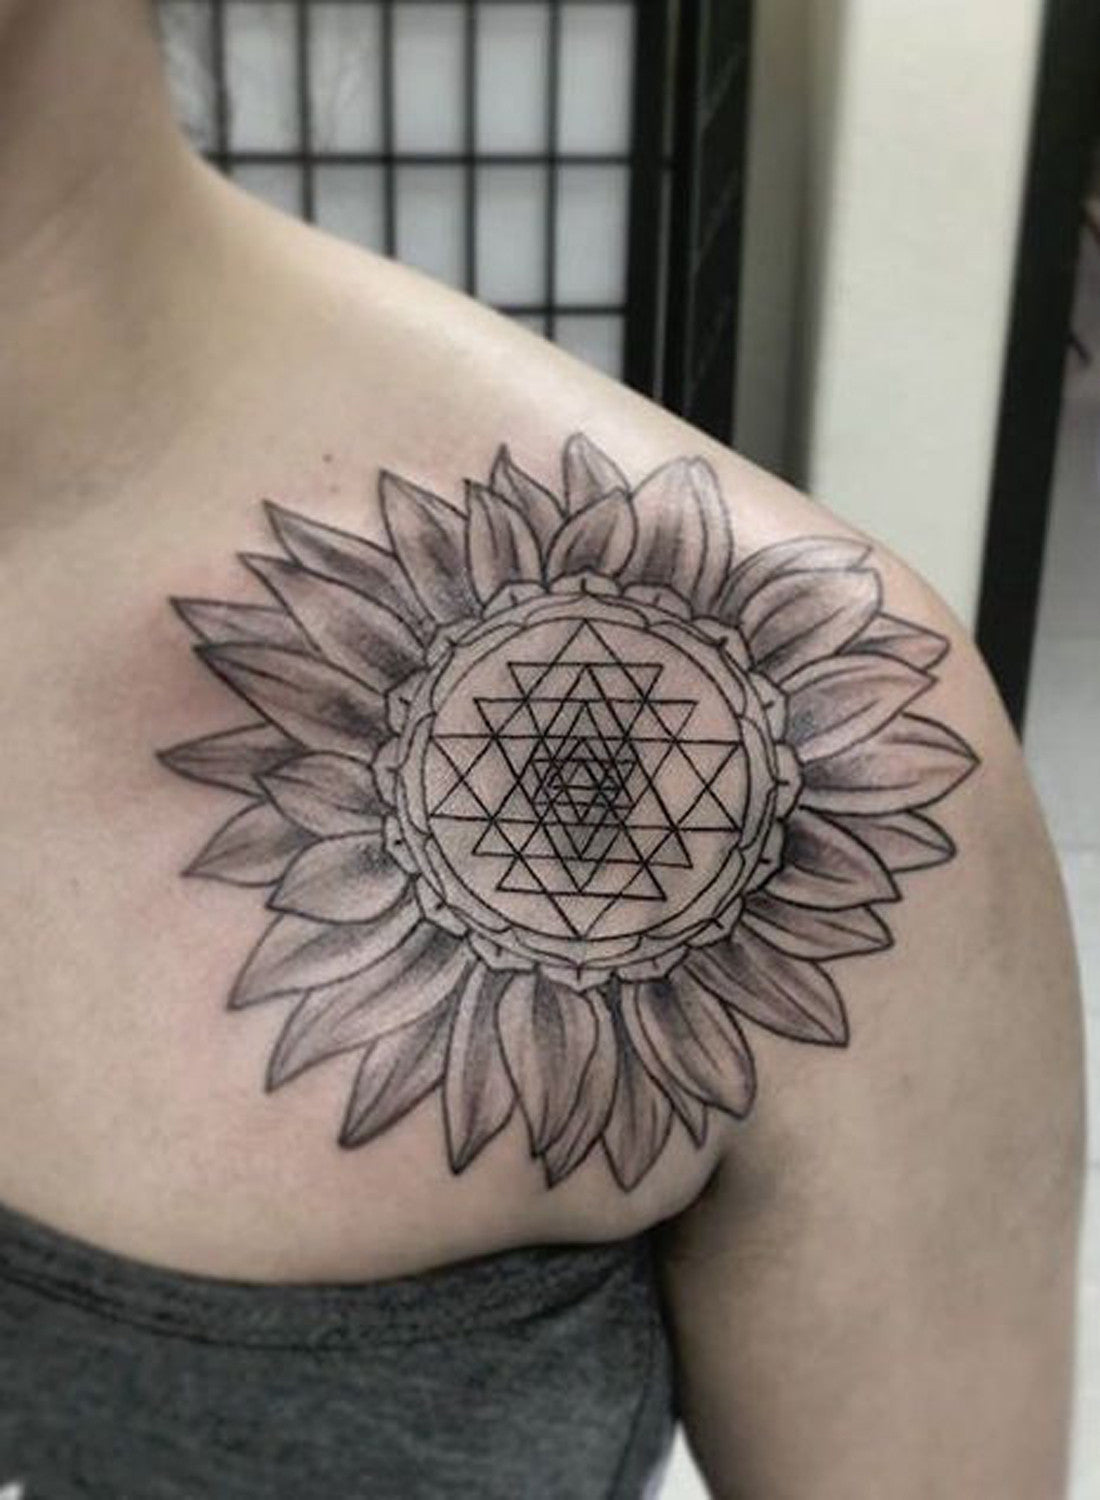 Sunflower Floral Tattoo on Shoulder - Large Geometric Mandala Design at MyBodiArt.com 